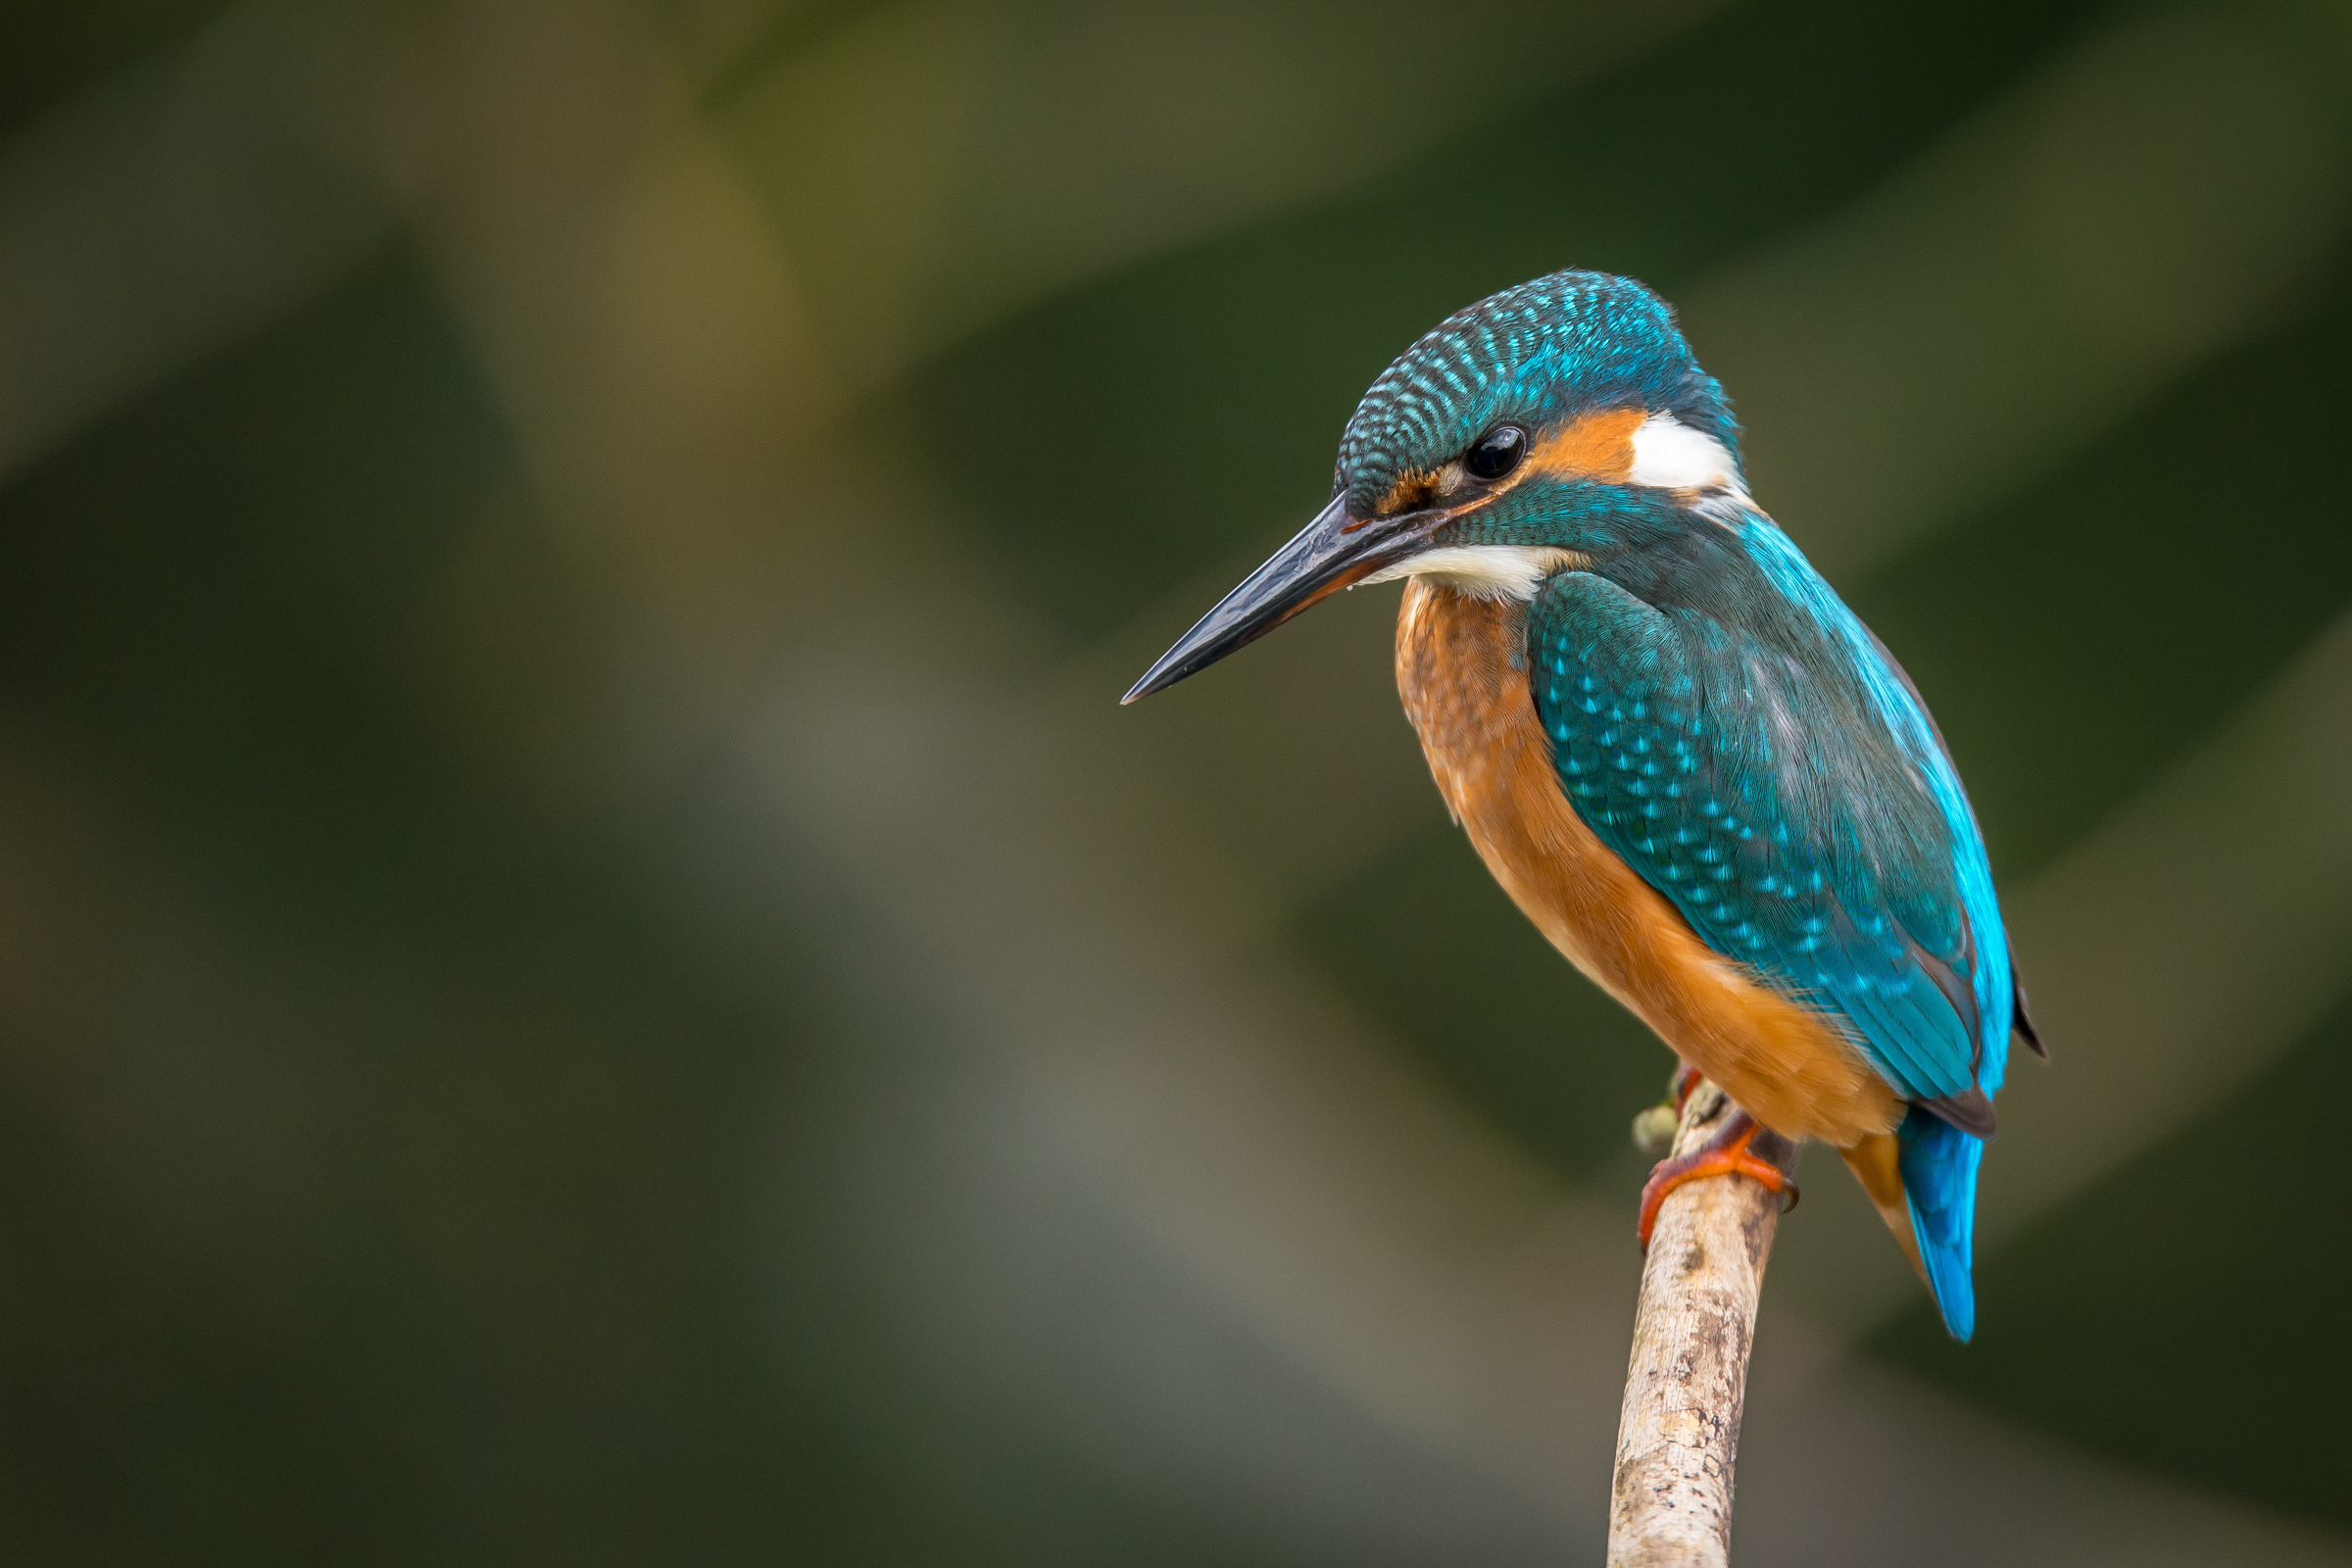 Kingfisher - biodiversity footprinting and accounting